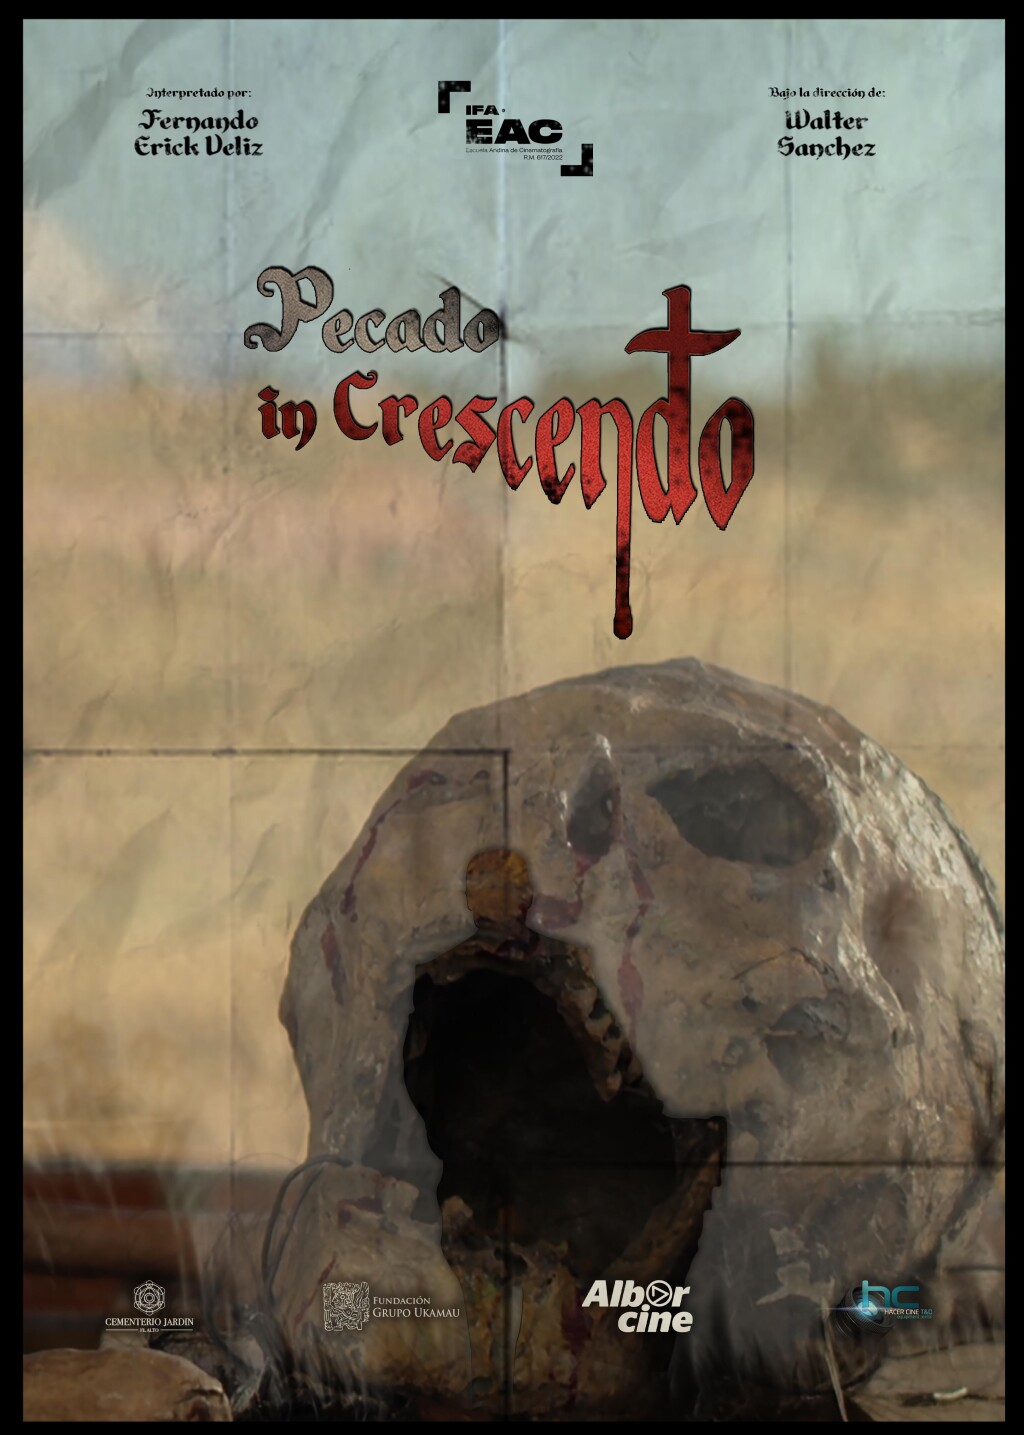 Filmposter for Pecado in Crescendo